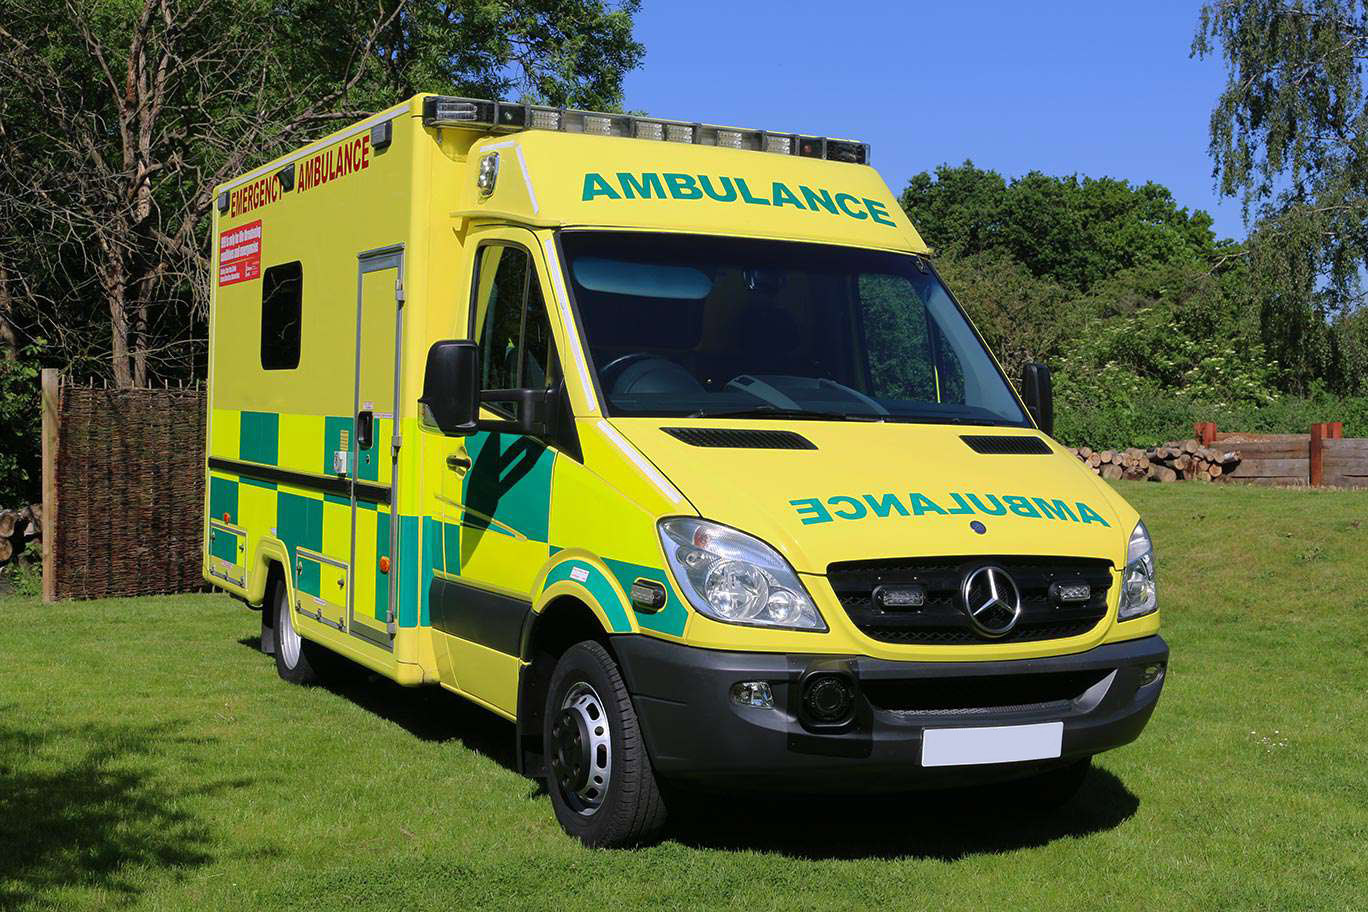 DLL used ambulances